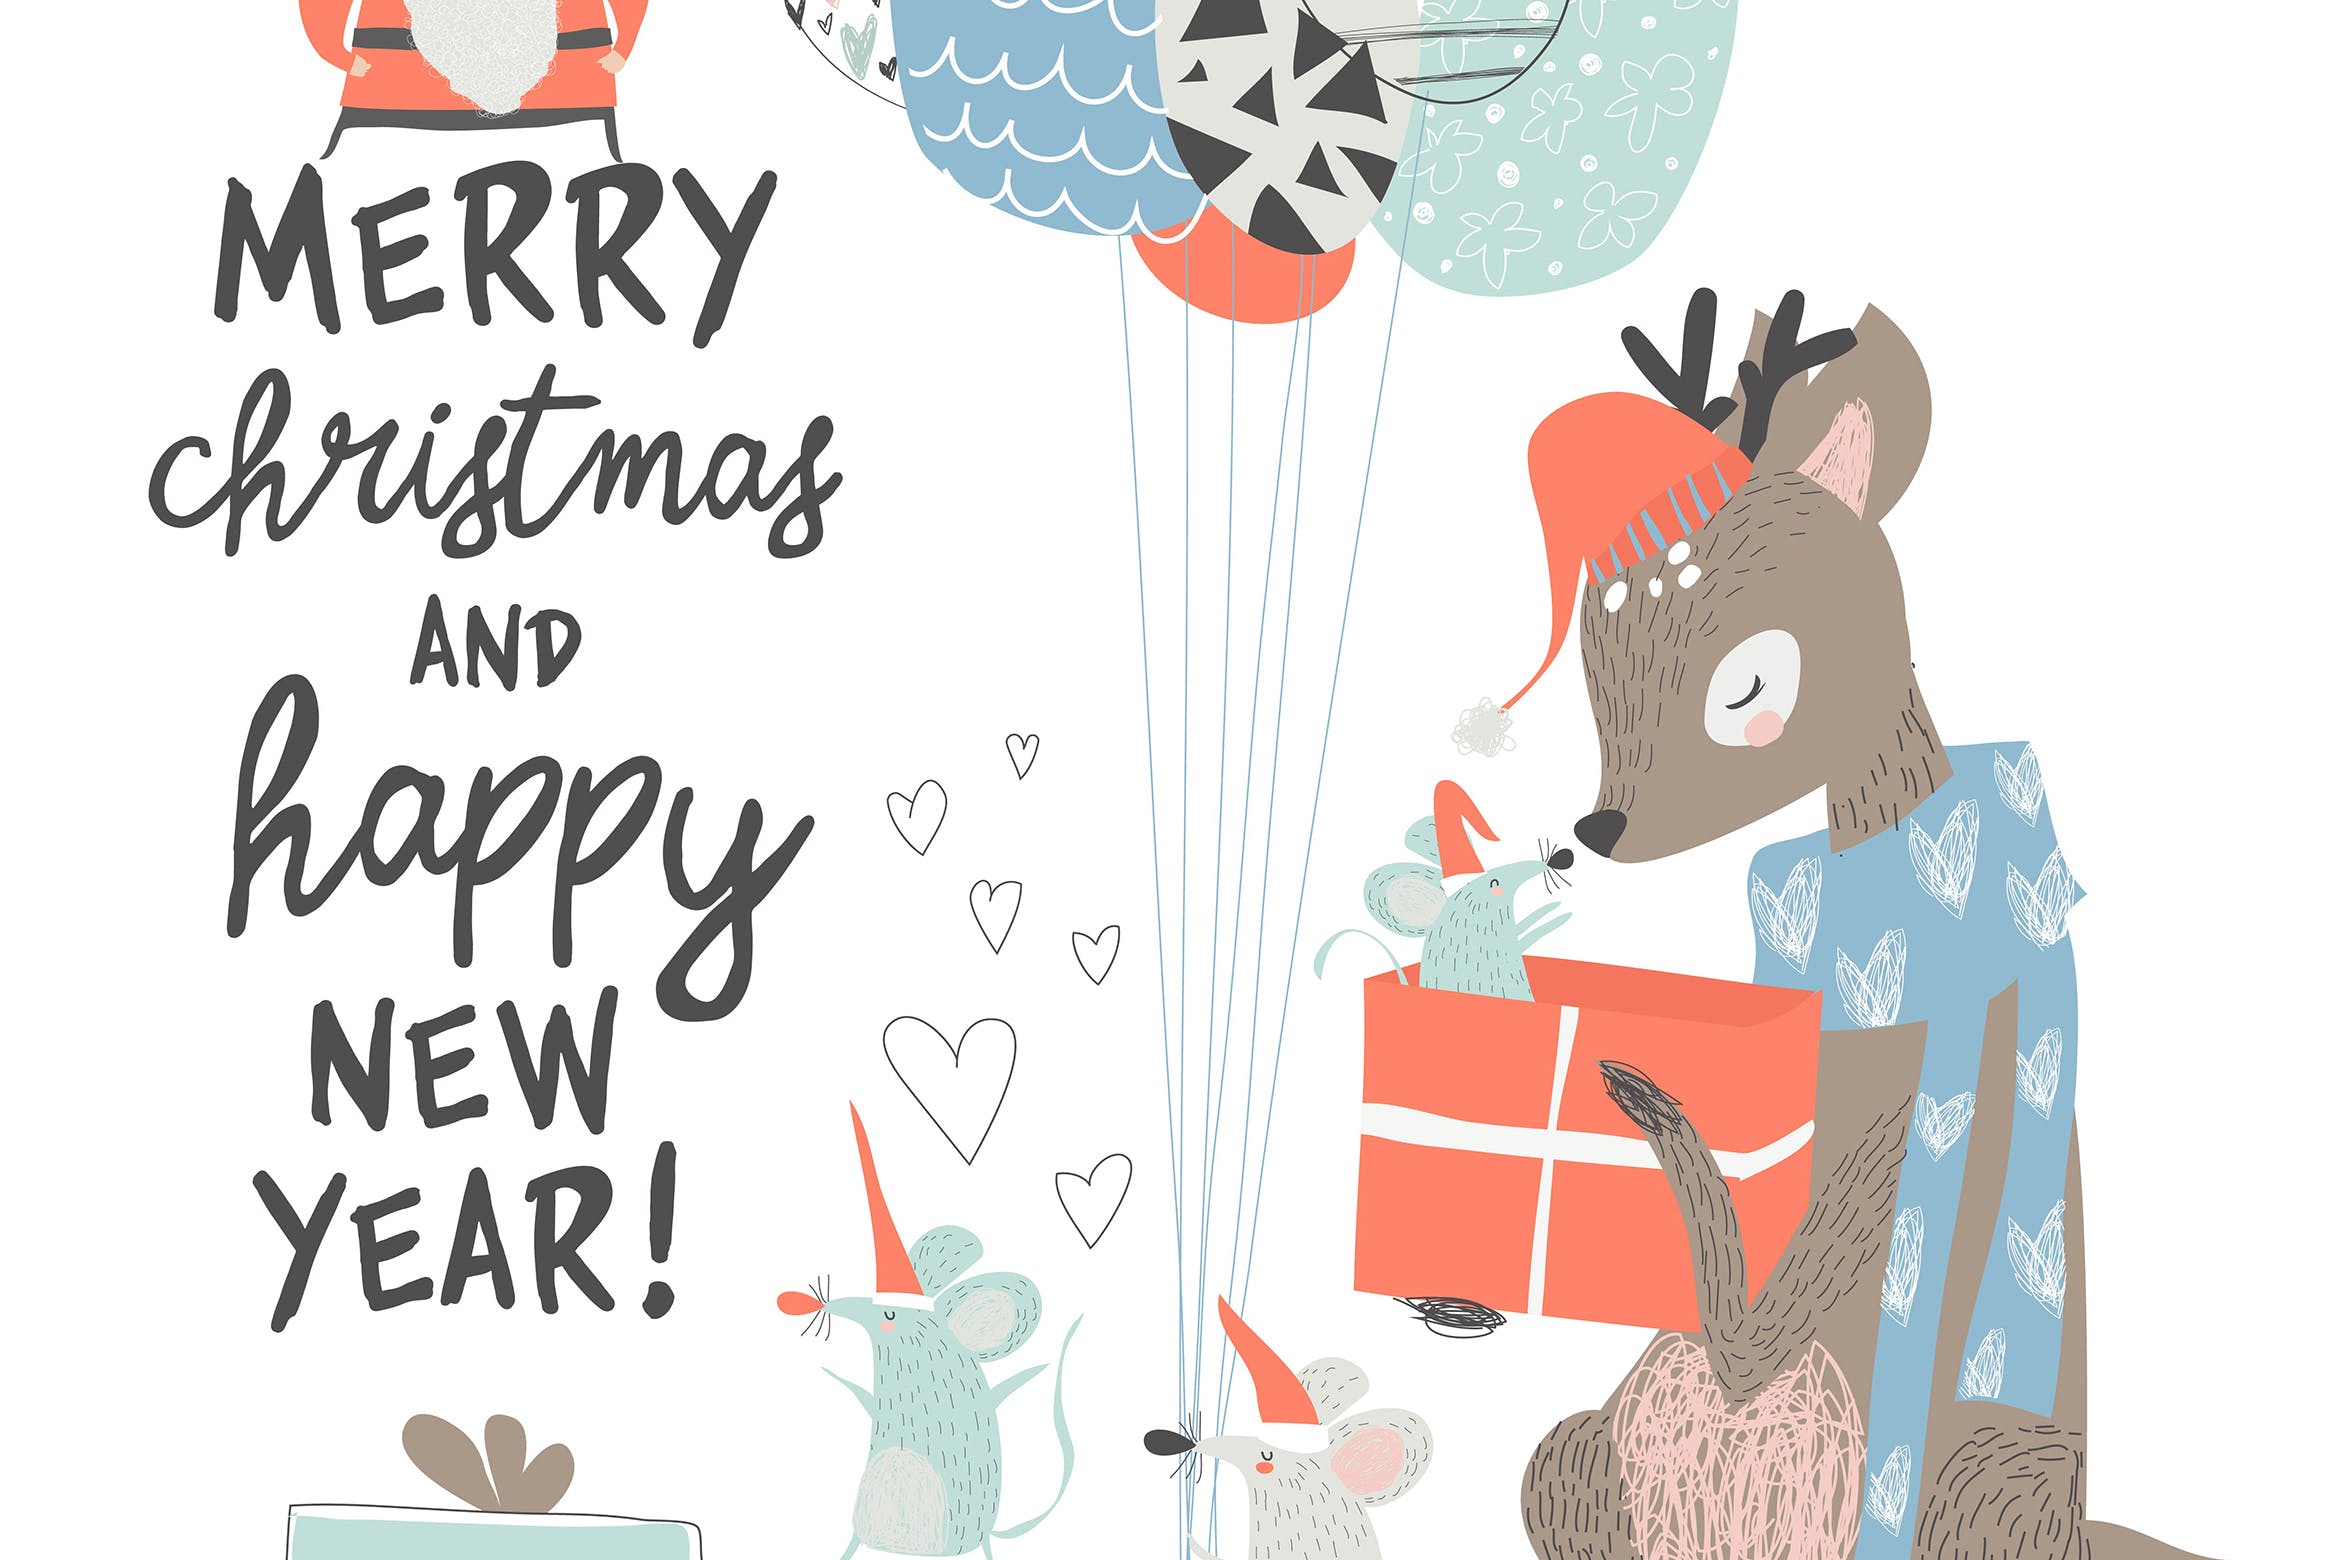 可爱卡通老鼠&驯鹿绘图案圣诞节贺卡设计模板v1 Vector Greeting Christmas card with cute deer and插图